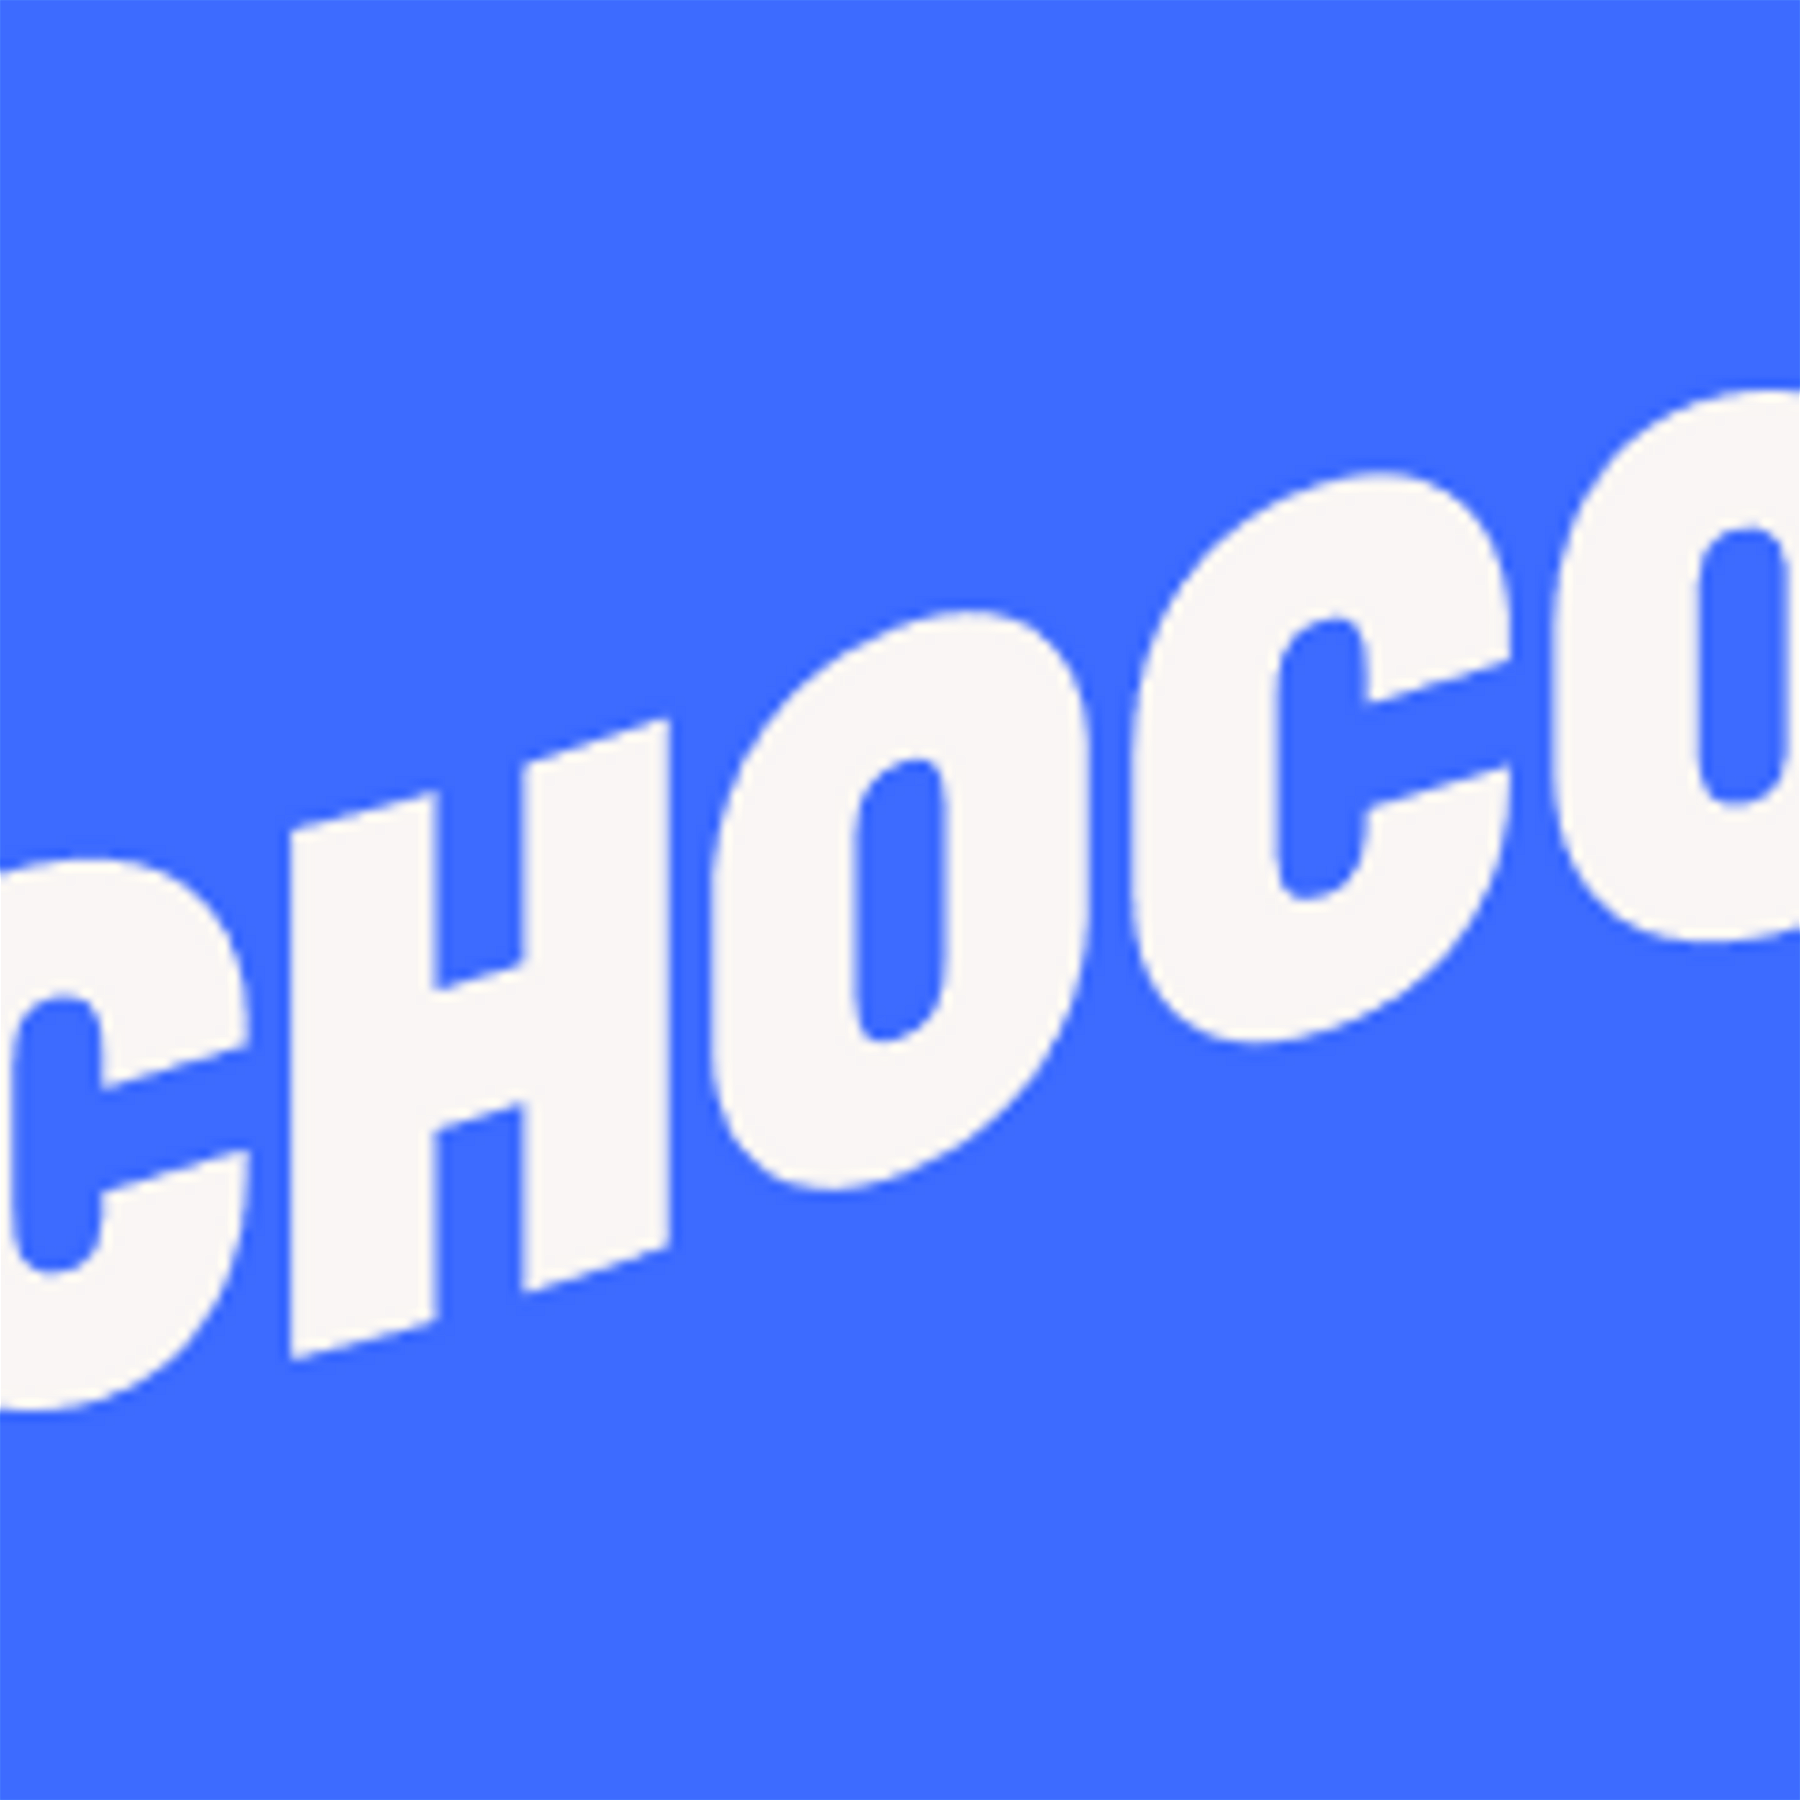 Choco | THE FOOD INDUSTRY'S #1 ORDERING PLATFORM